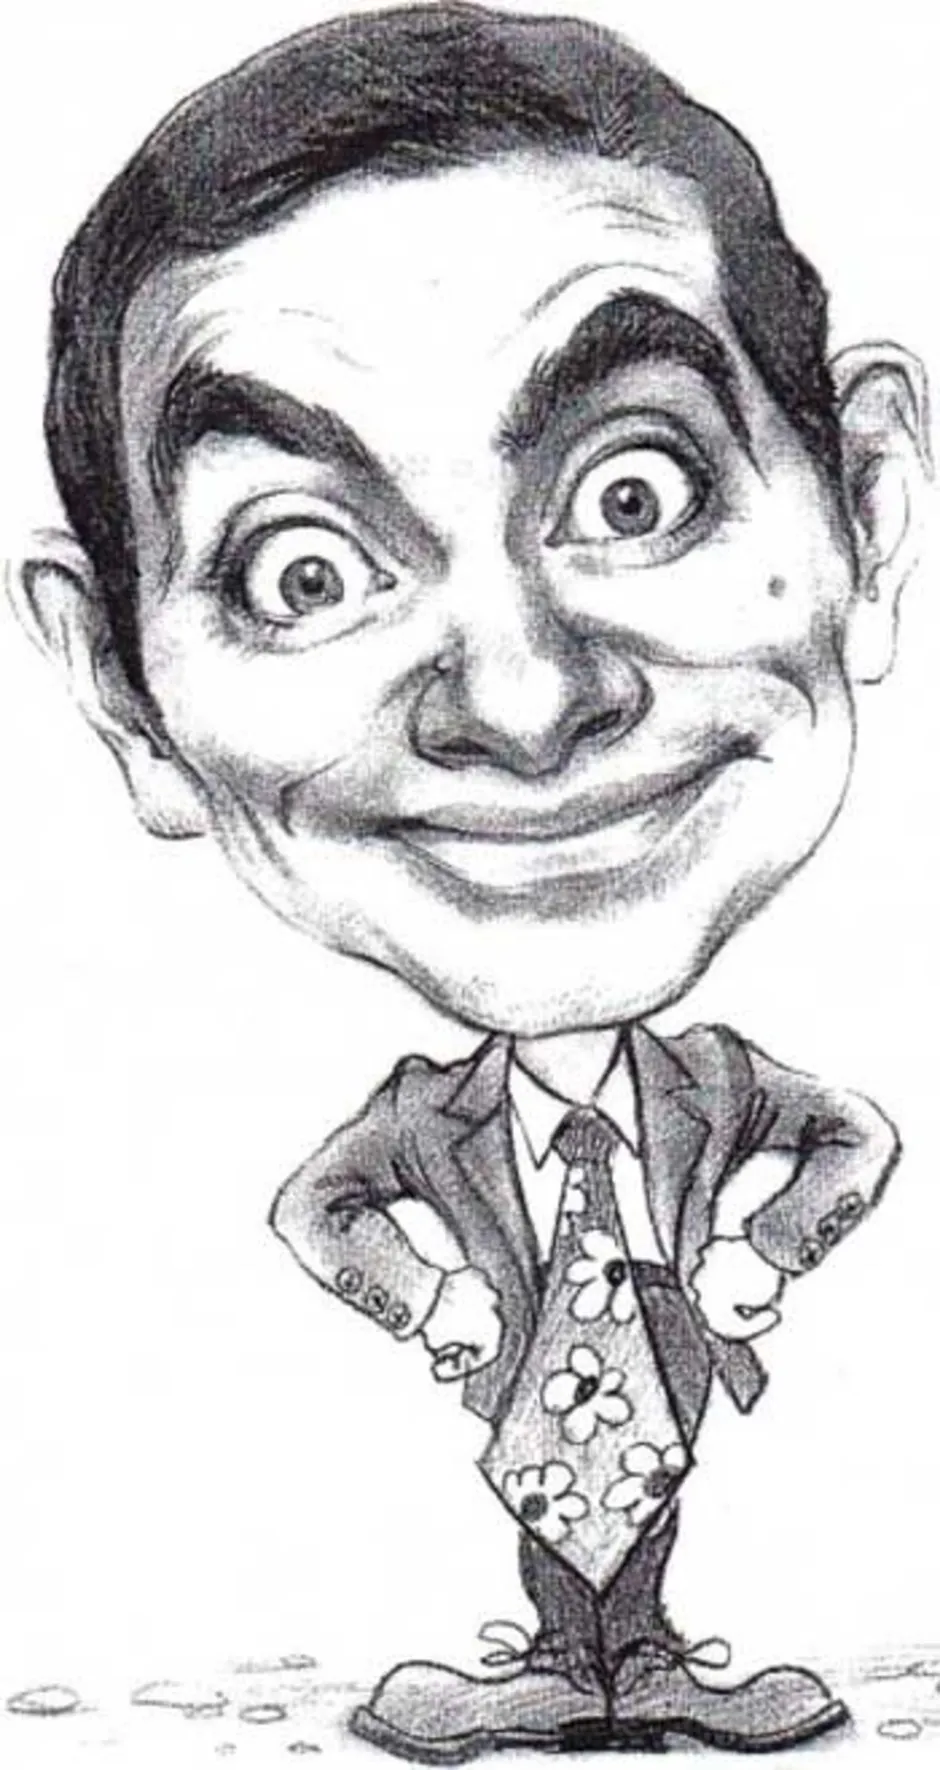 Комичный герой. Шарж Мистер Бин. Сатирический портрет мистера Бина. Шарж карандашом. Карикатуры карандашом смешные.